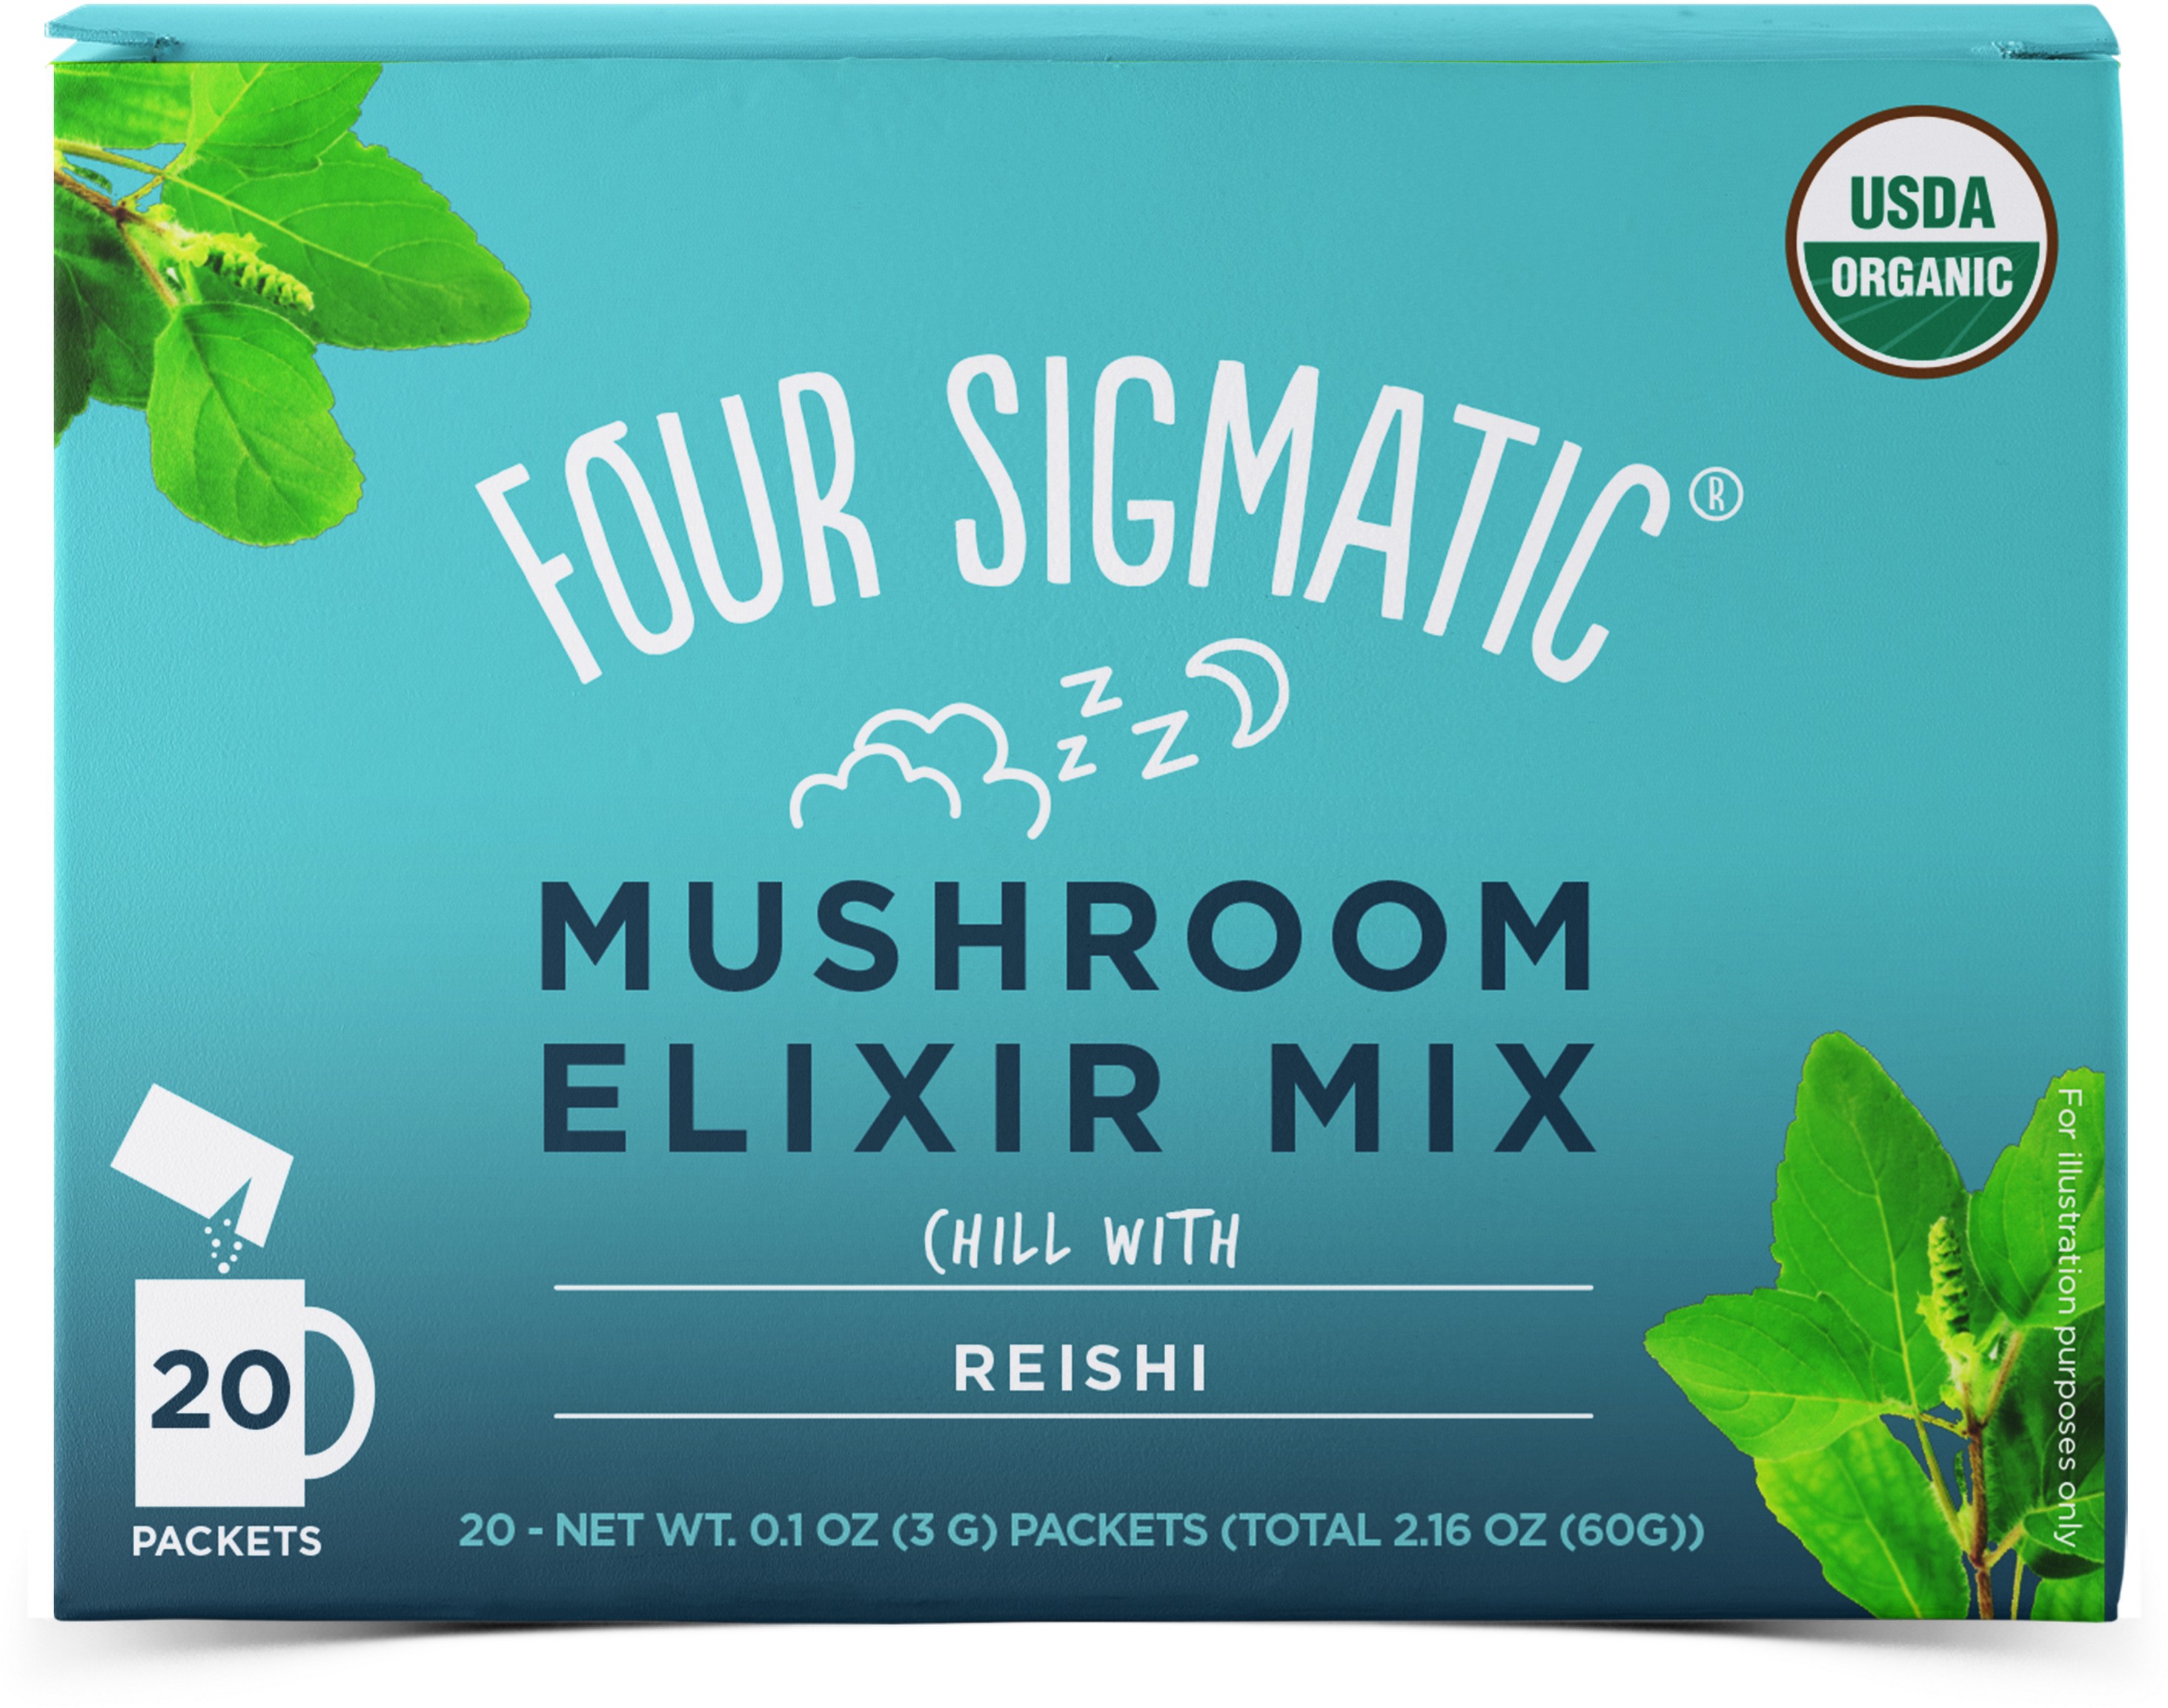 Mushroom Elixir Mix Chill With Reishi 20 x 3g